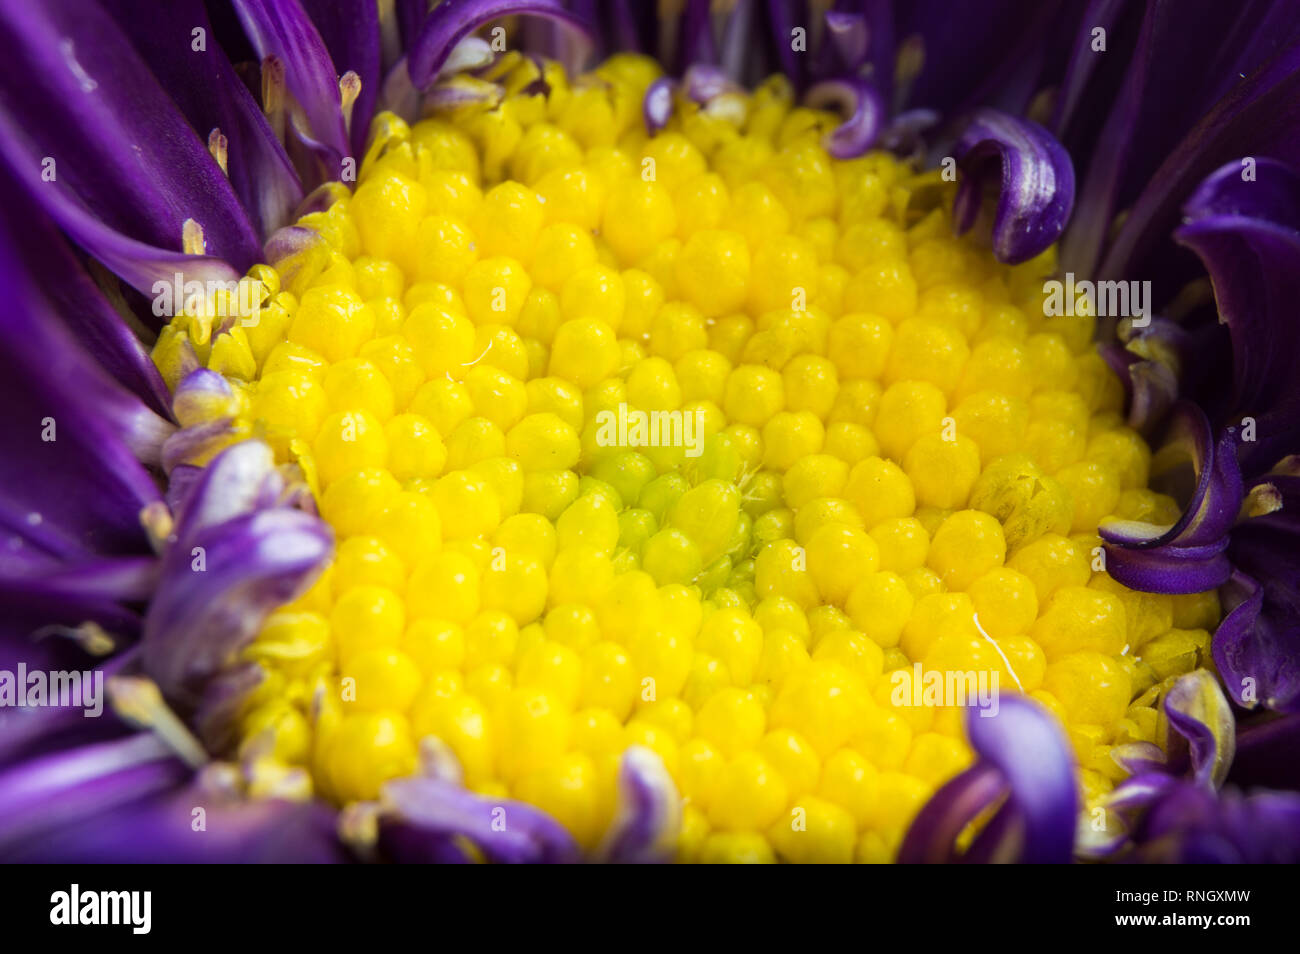 Purple Aster Flower Stock Photo